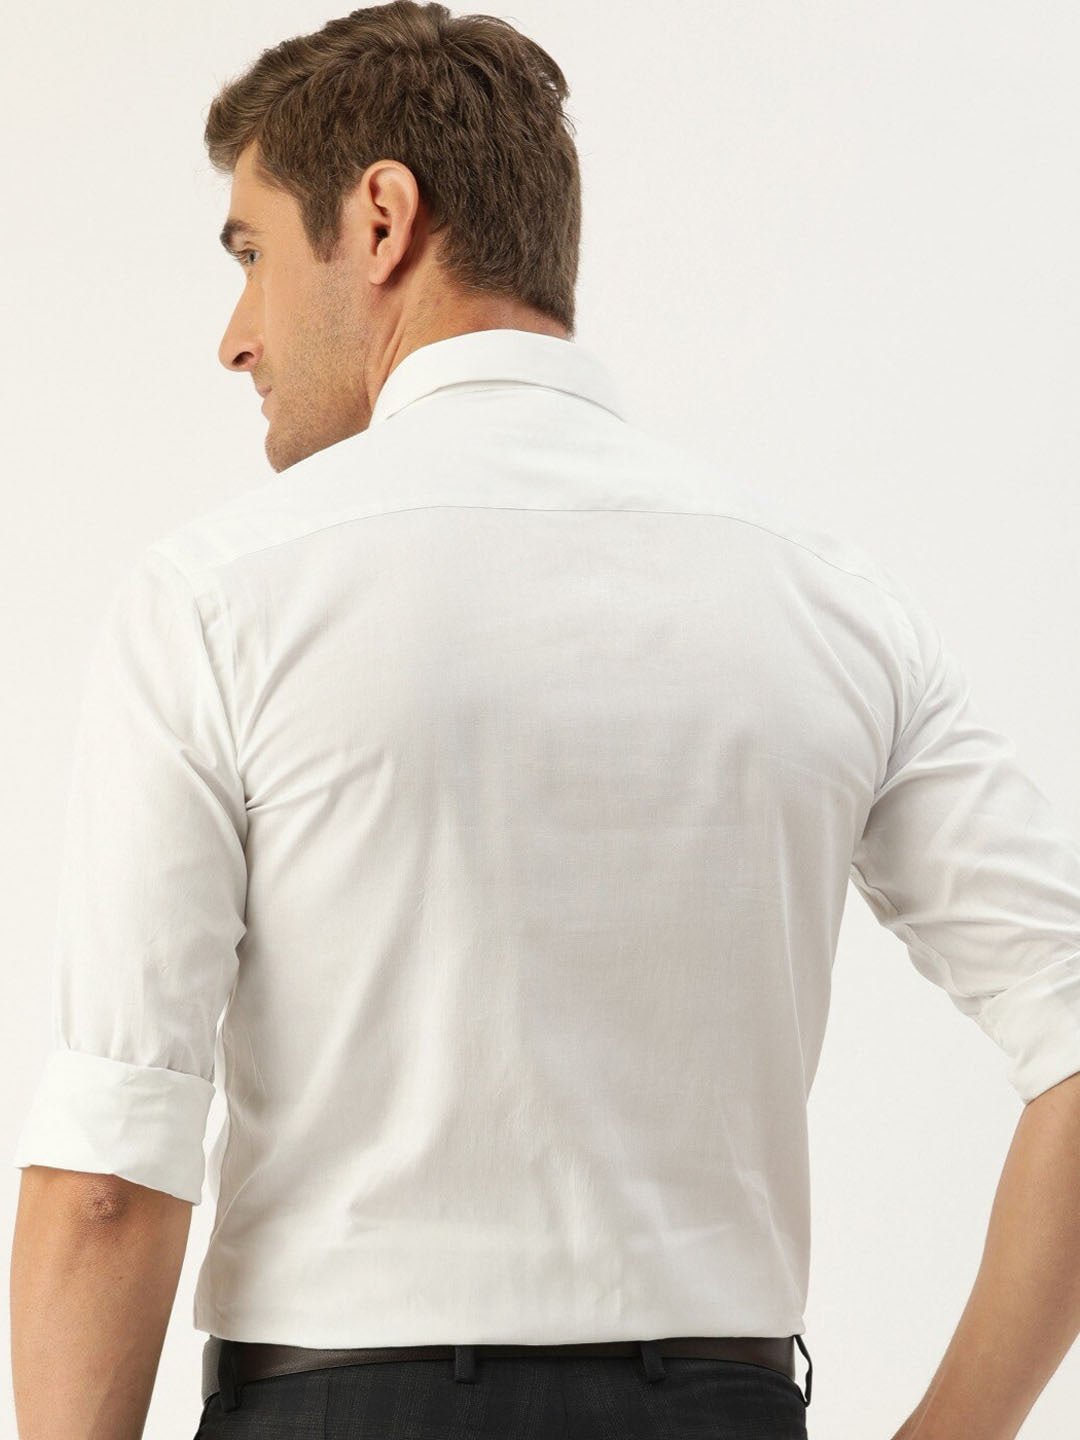 Men White Solids Pure Cotton Slim Fit Formal Shirt - #folk republic#